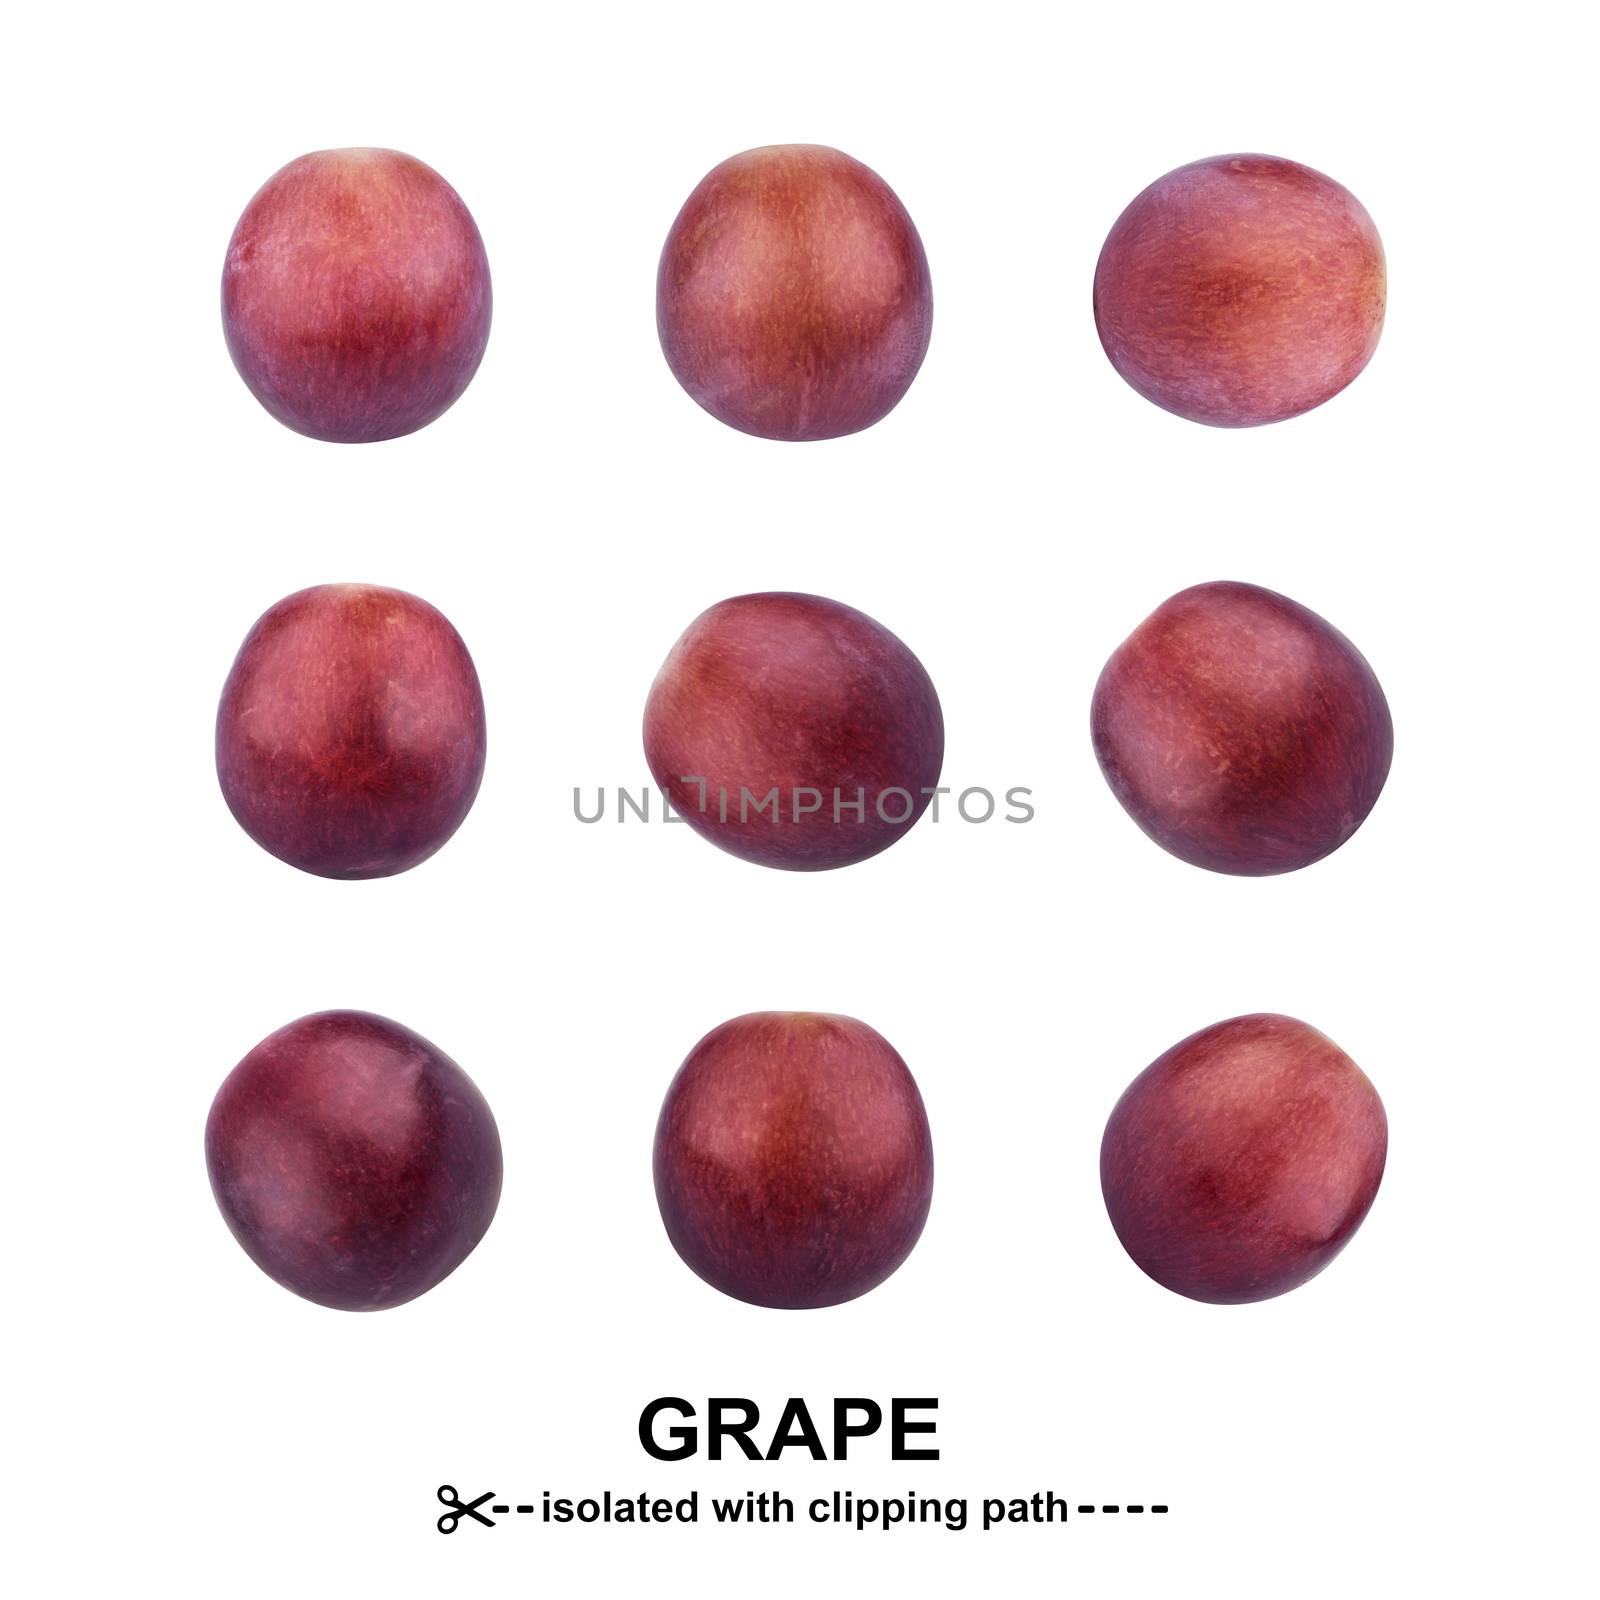 Grape isolated on white background by xamtiw